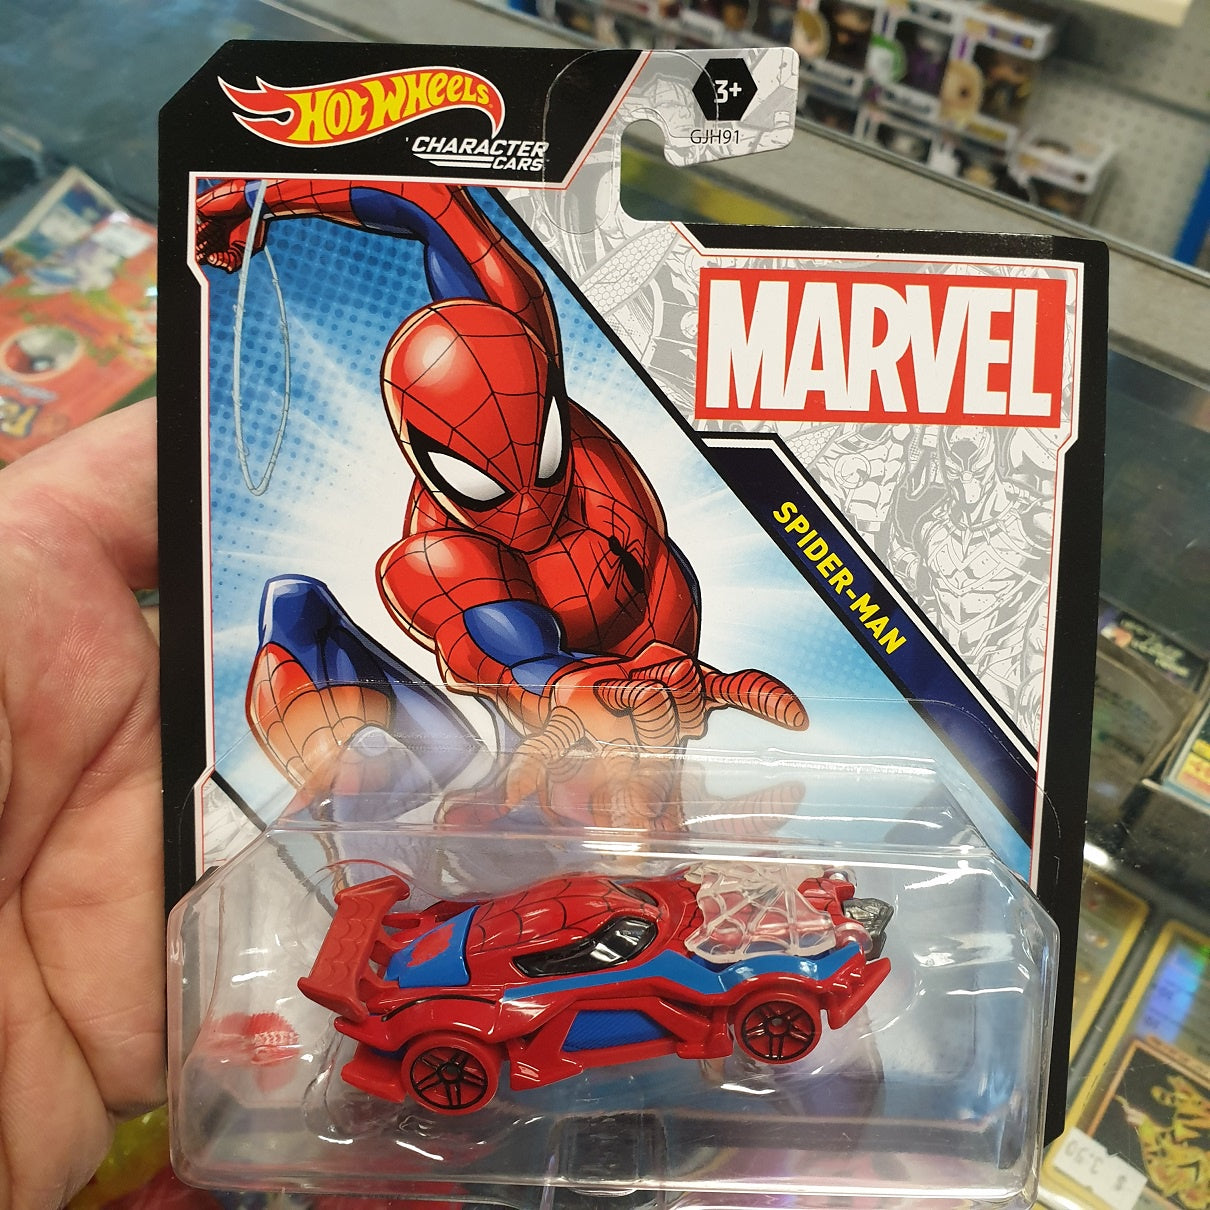 Hot Wheels Character Cars - Marvel - Spiderman